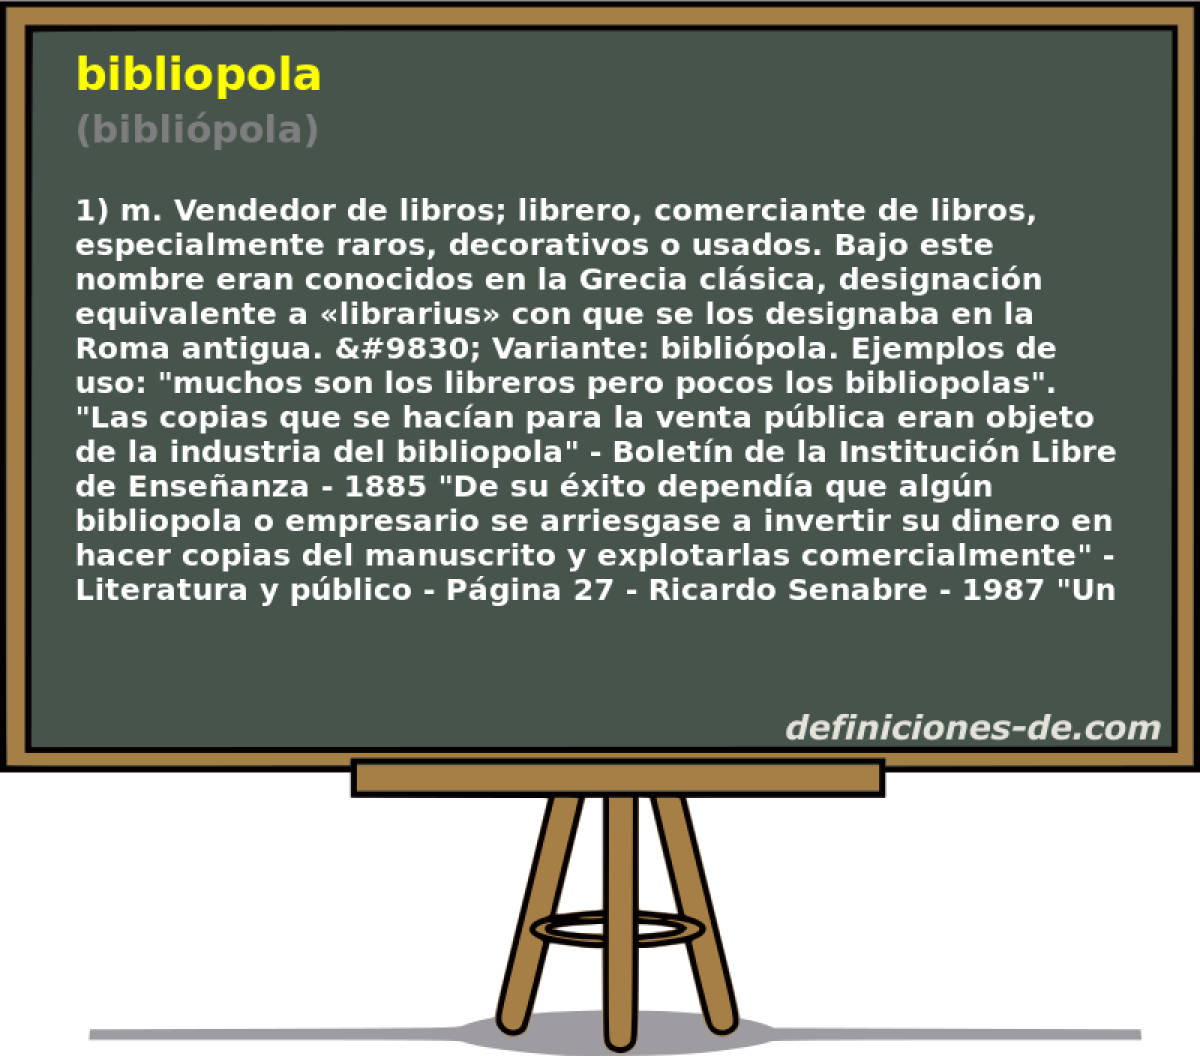 bibliopola (biblipola)